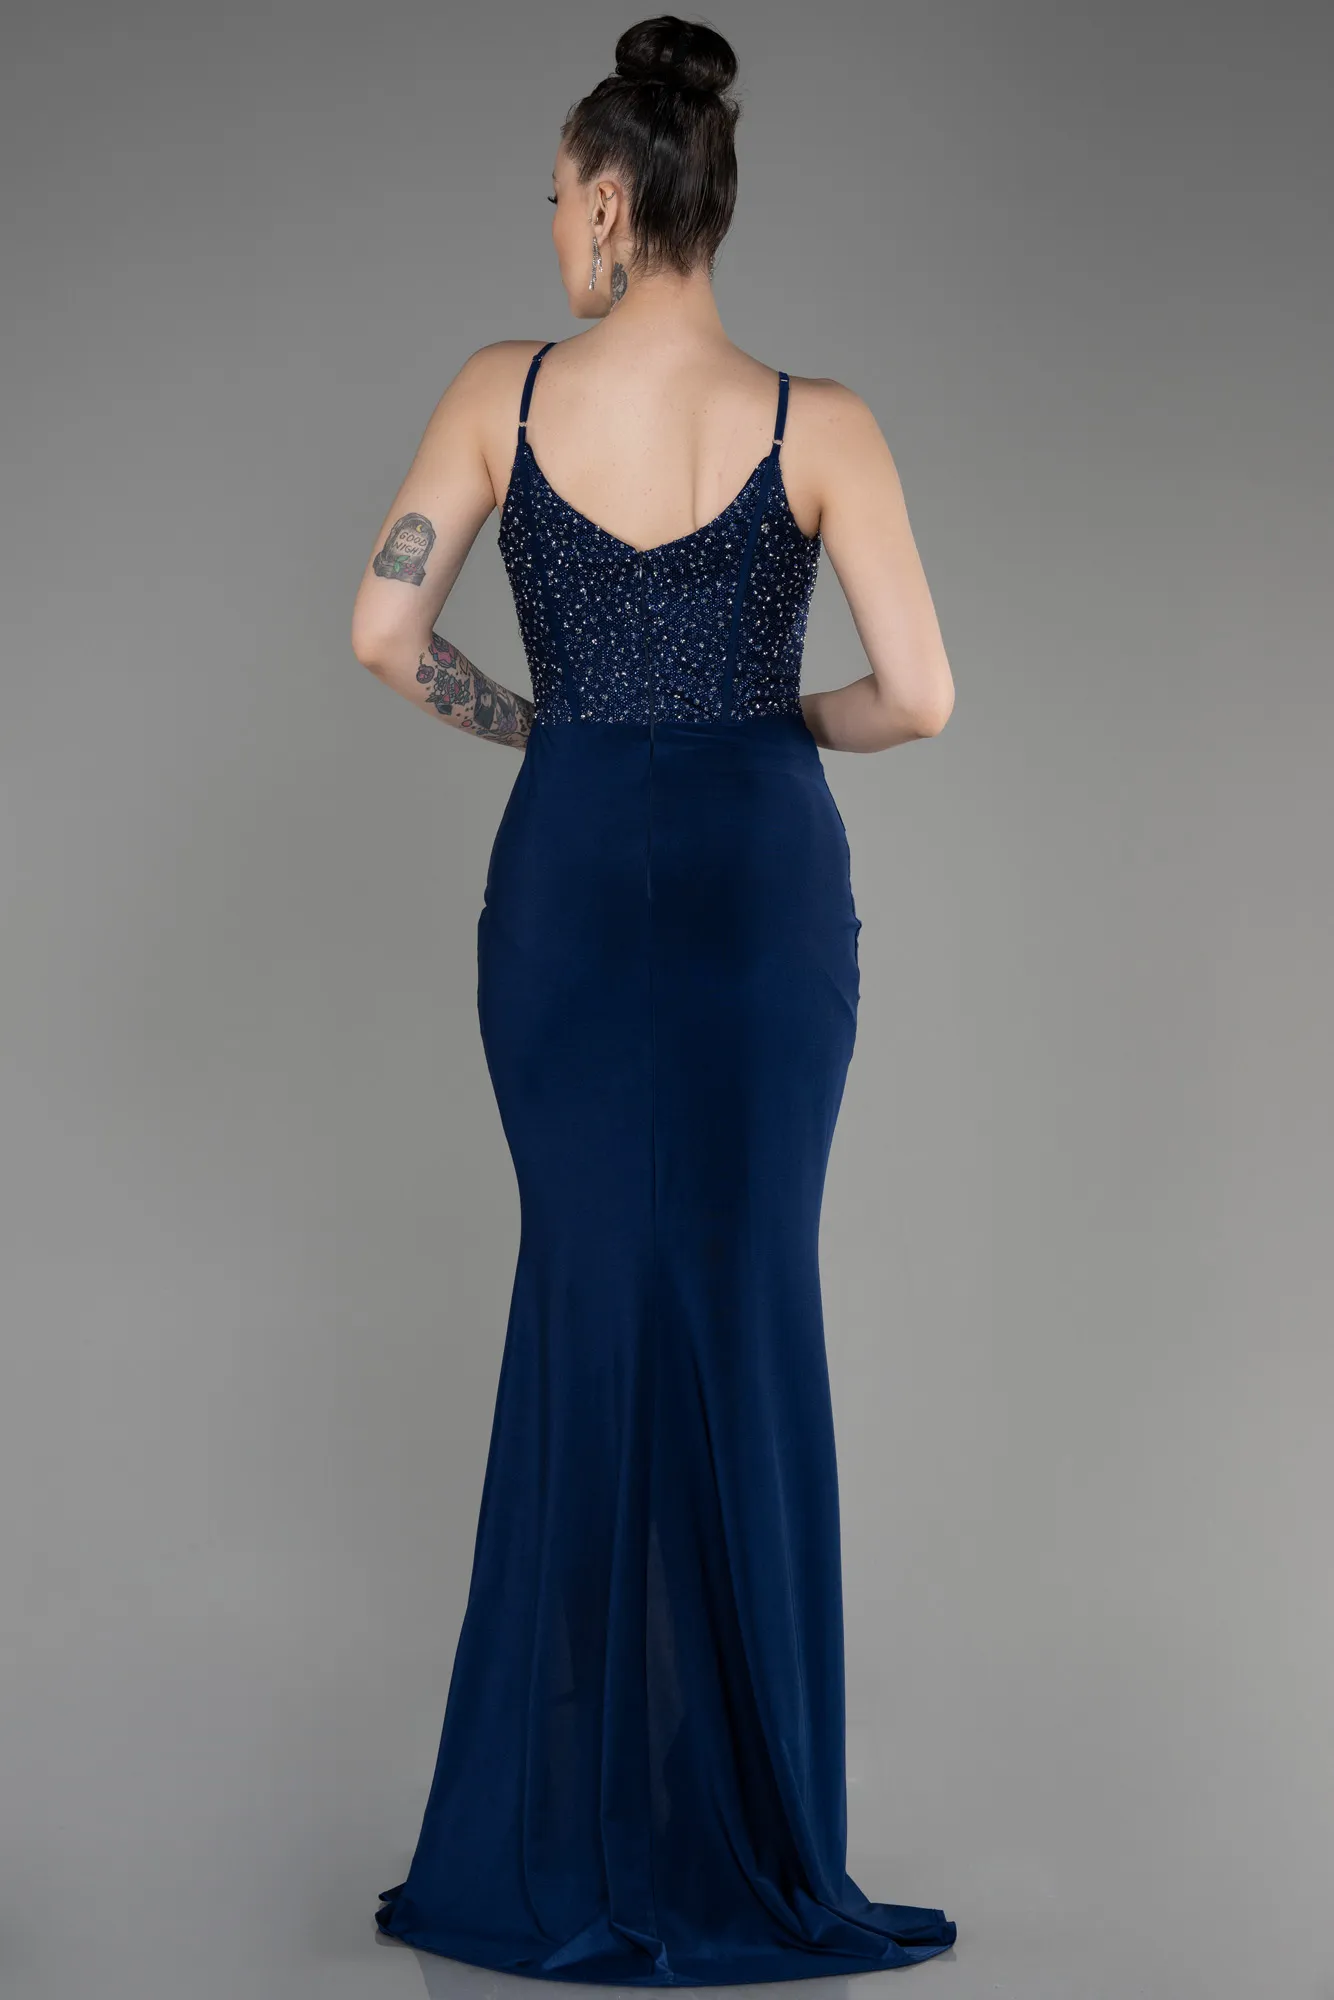 Navy Blue-Long Mermaid Prom Dress ABU3786